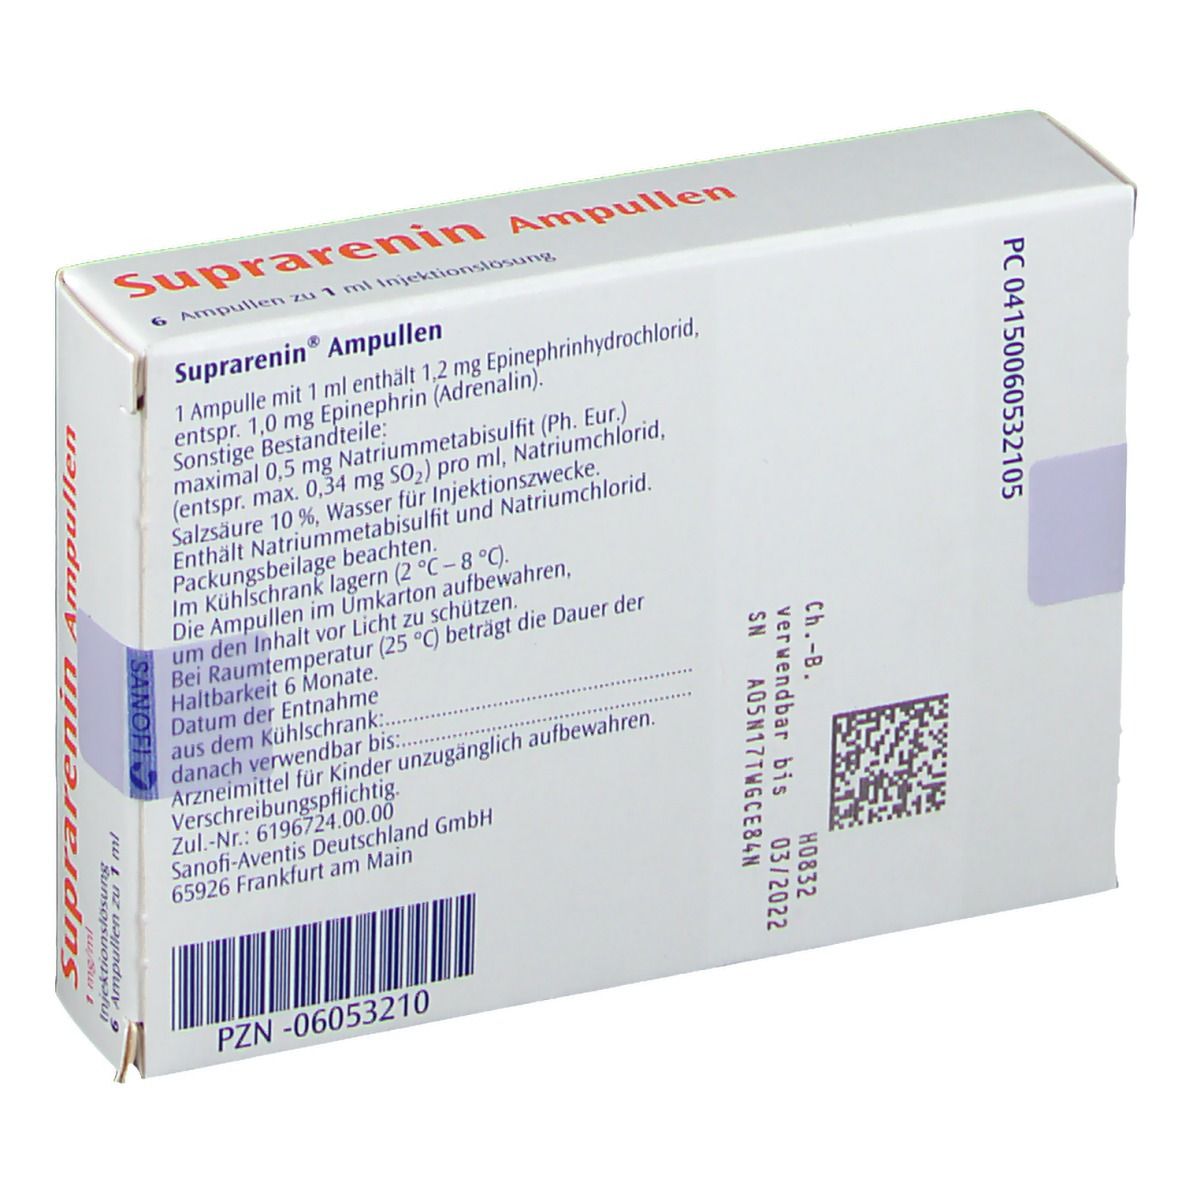 Suprarenin® AMPULLEN 1 mg/ml